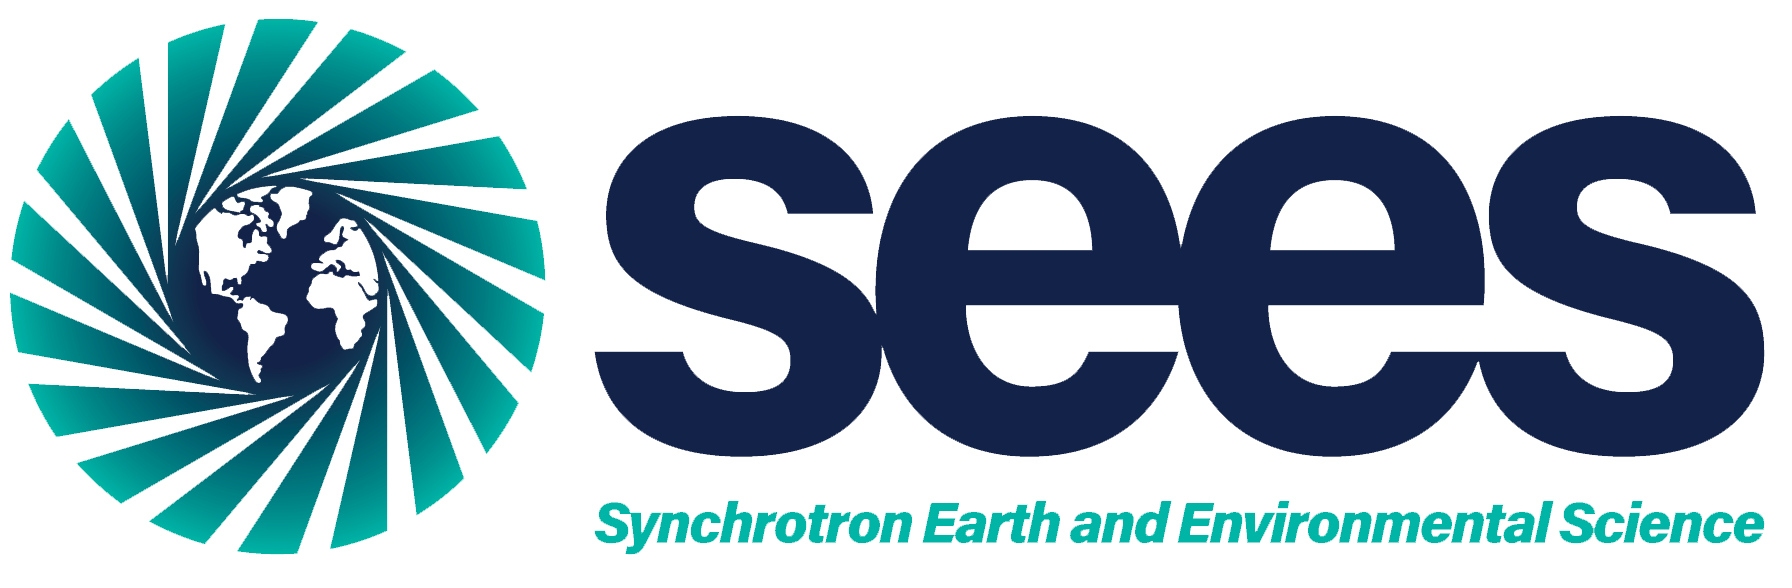 sees-logo